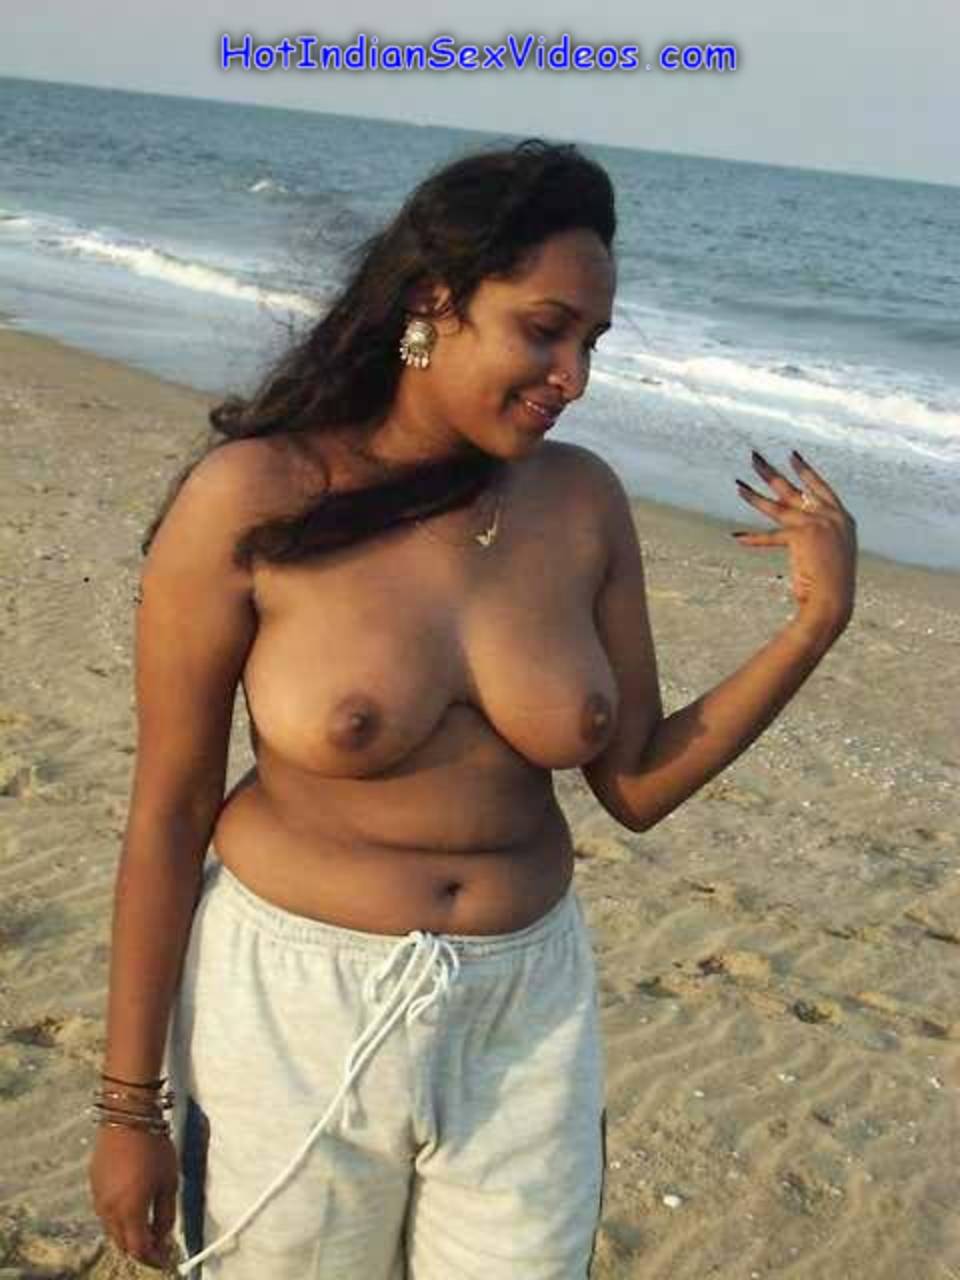 Bengali nude girls pic